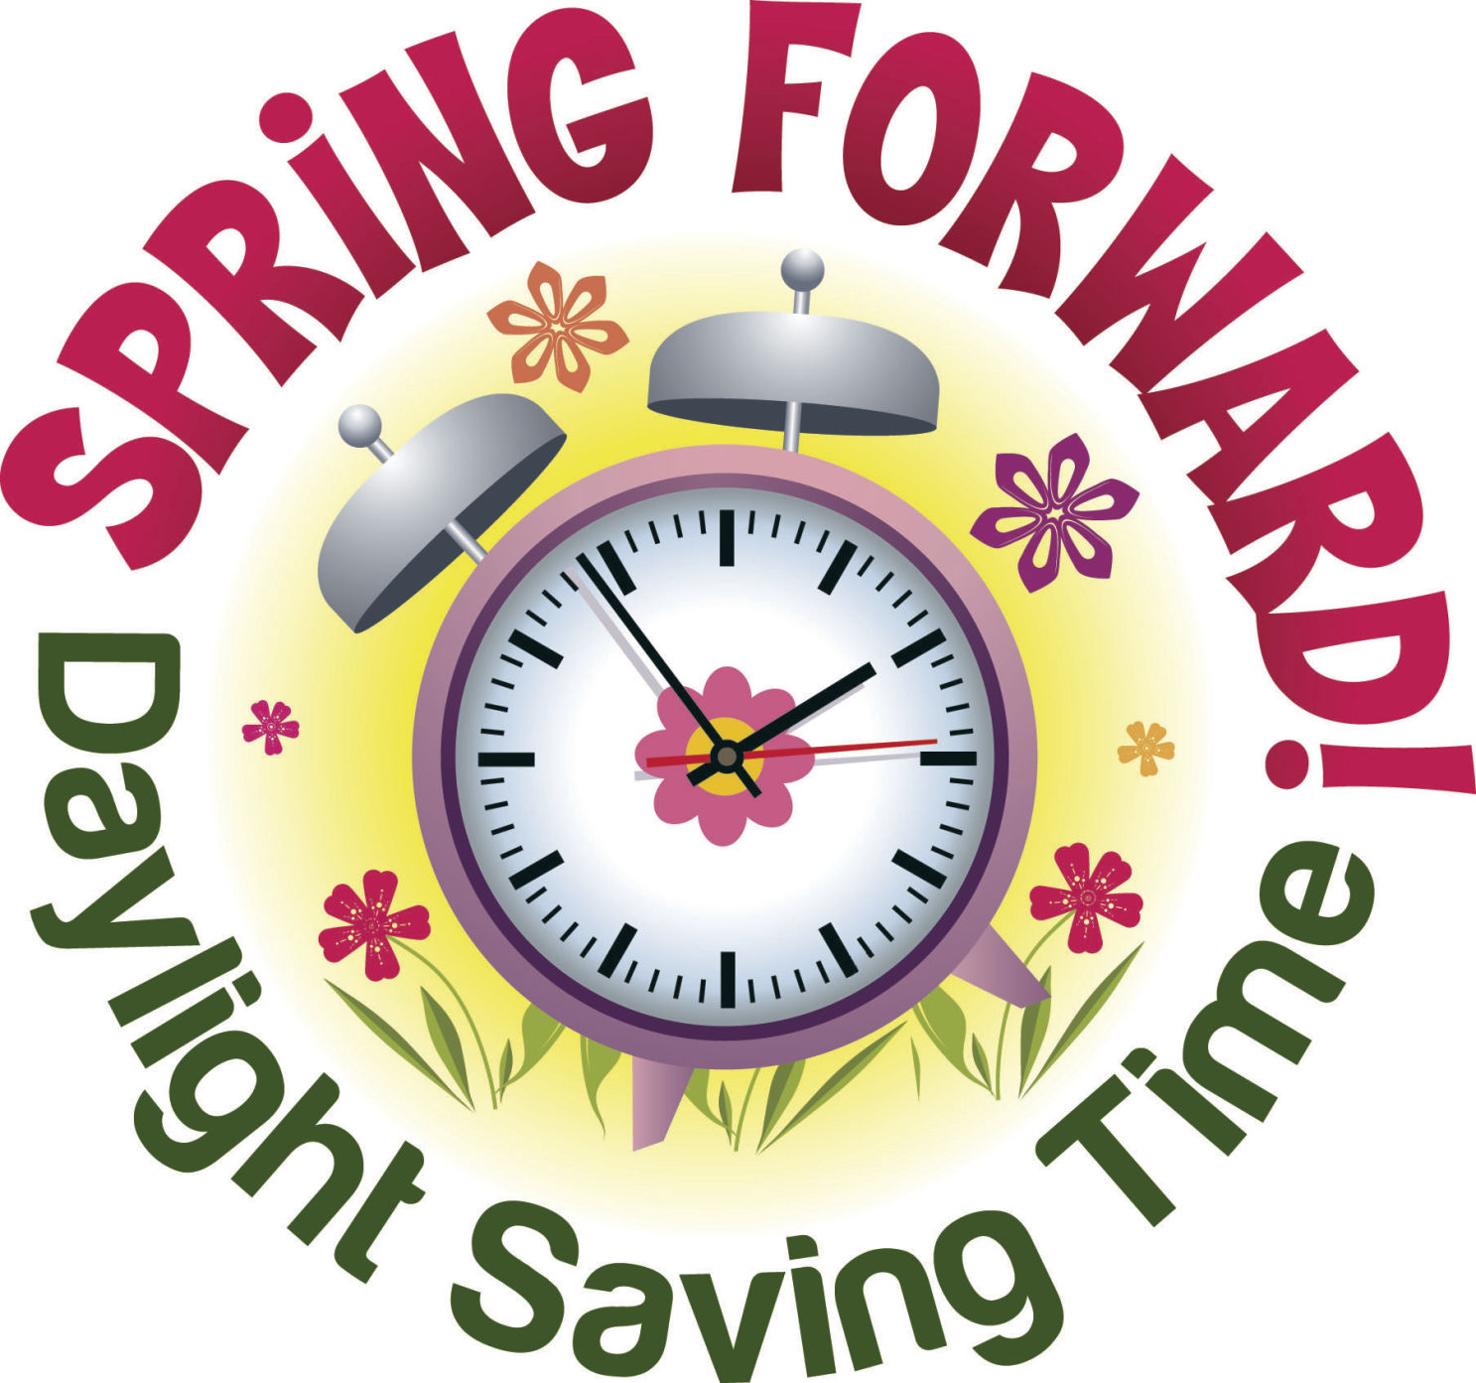 Spring Forward! Daylight Saving Time begins this Sunday. News